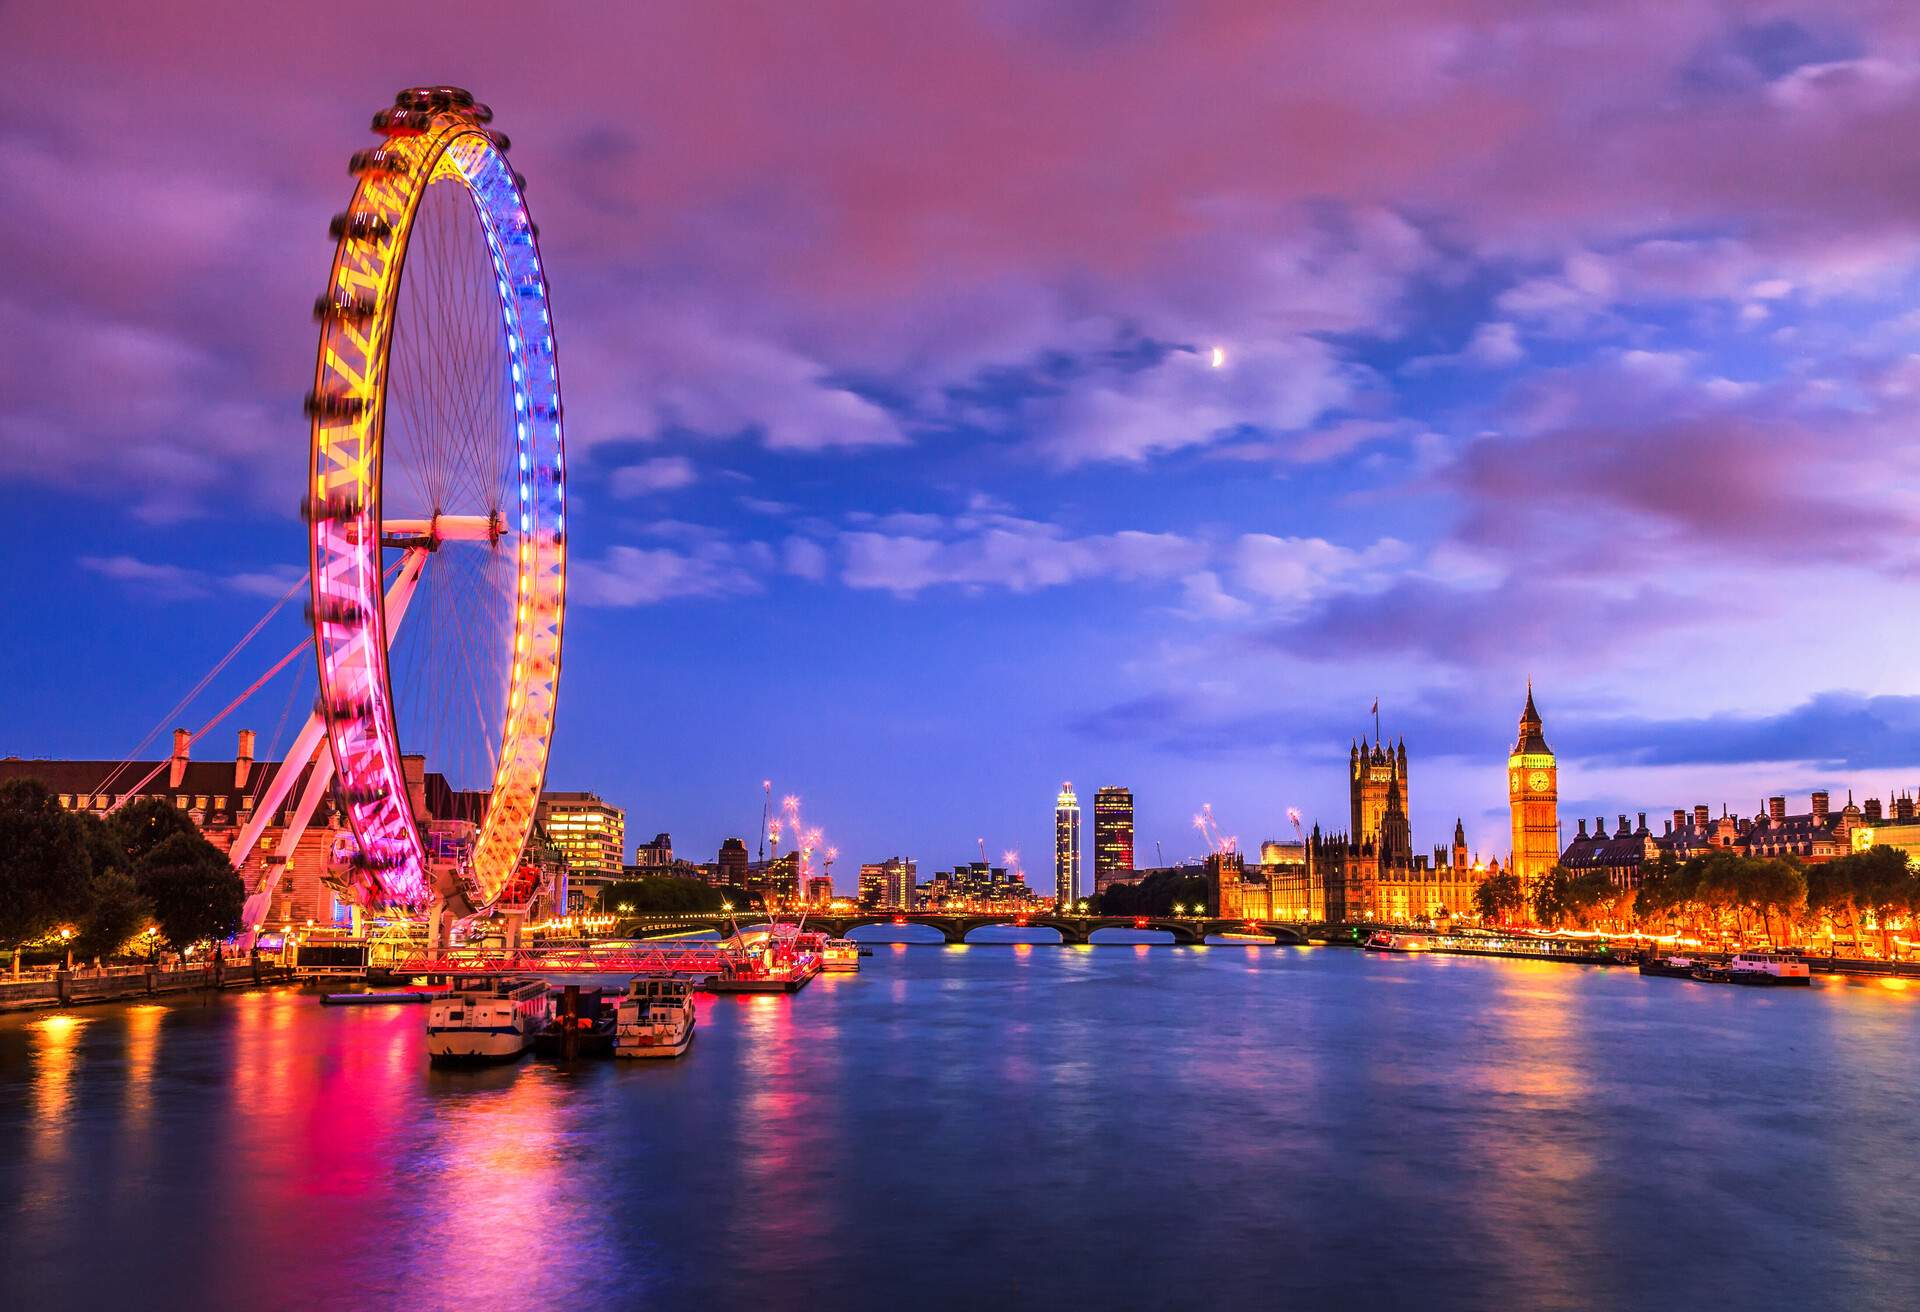 UK_ENG_LONDON_London-eye-County-Hall-Westminster-Bridge-Big-Ben-Houses-of-Parliament